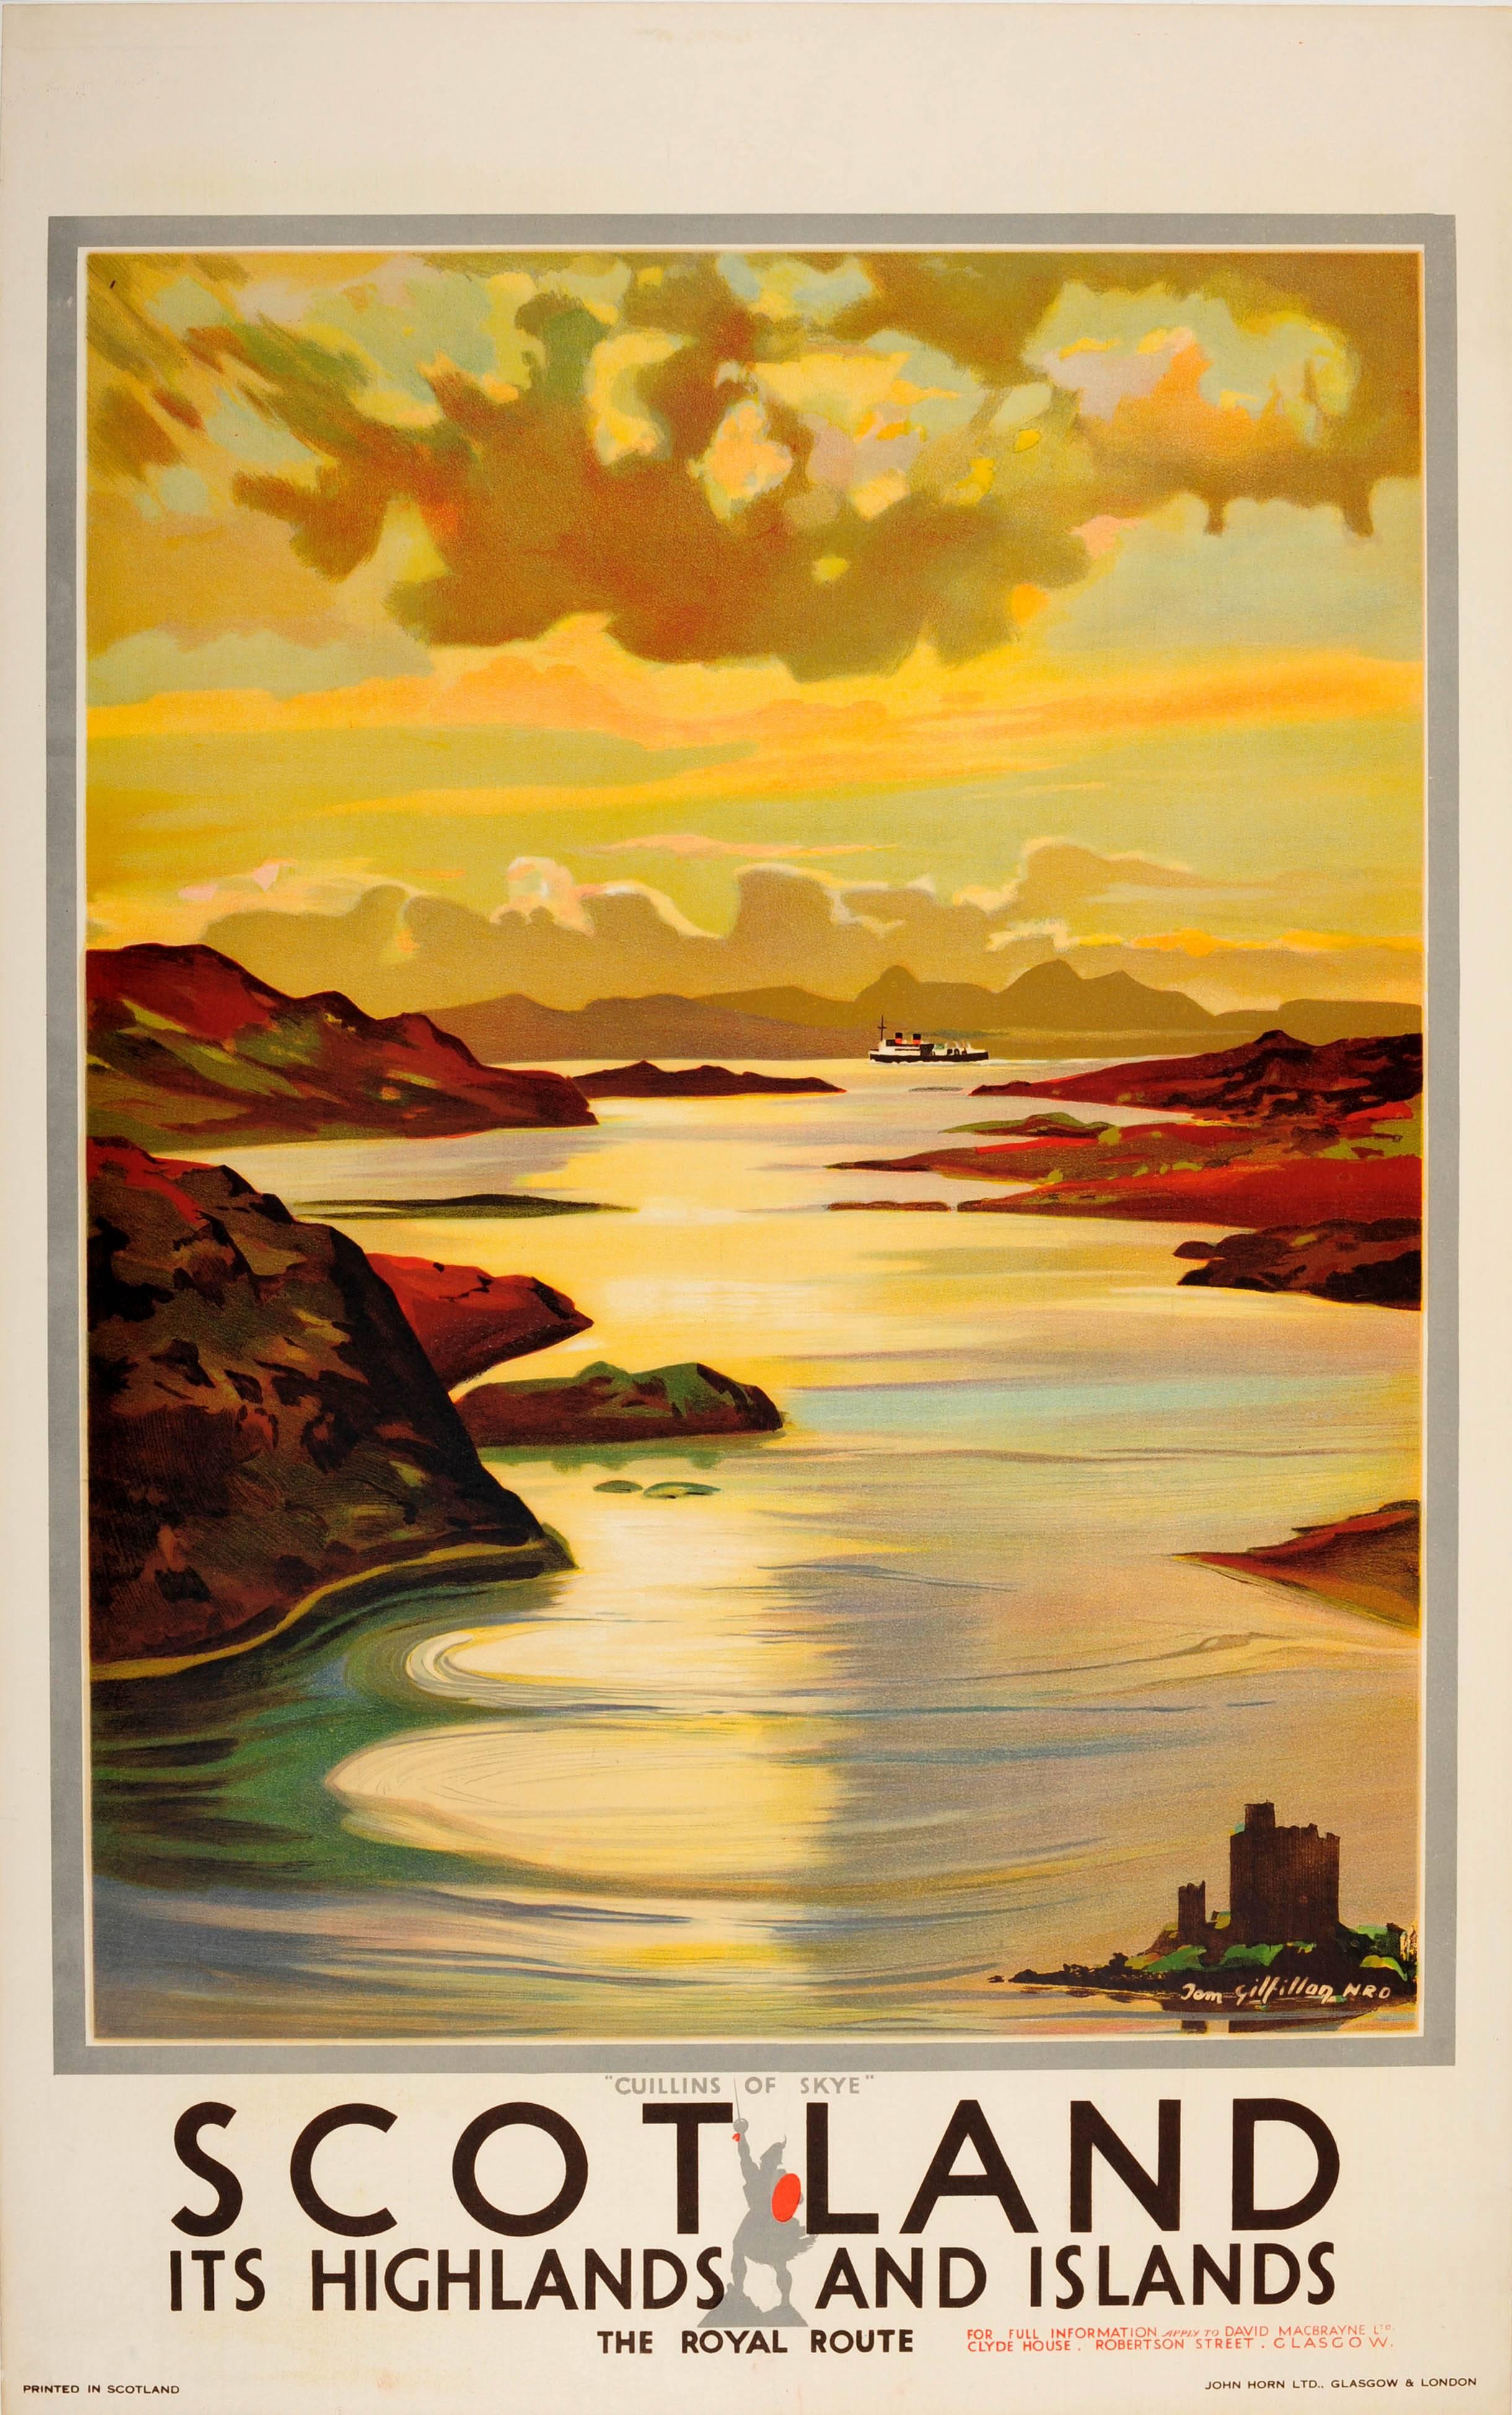 Tom Gilfillan Print - Original Vintage Isle Of Skye Poster Scotland Highlands And Islands Royal Route